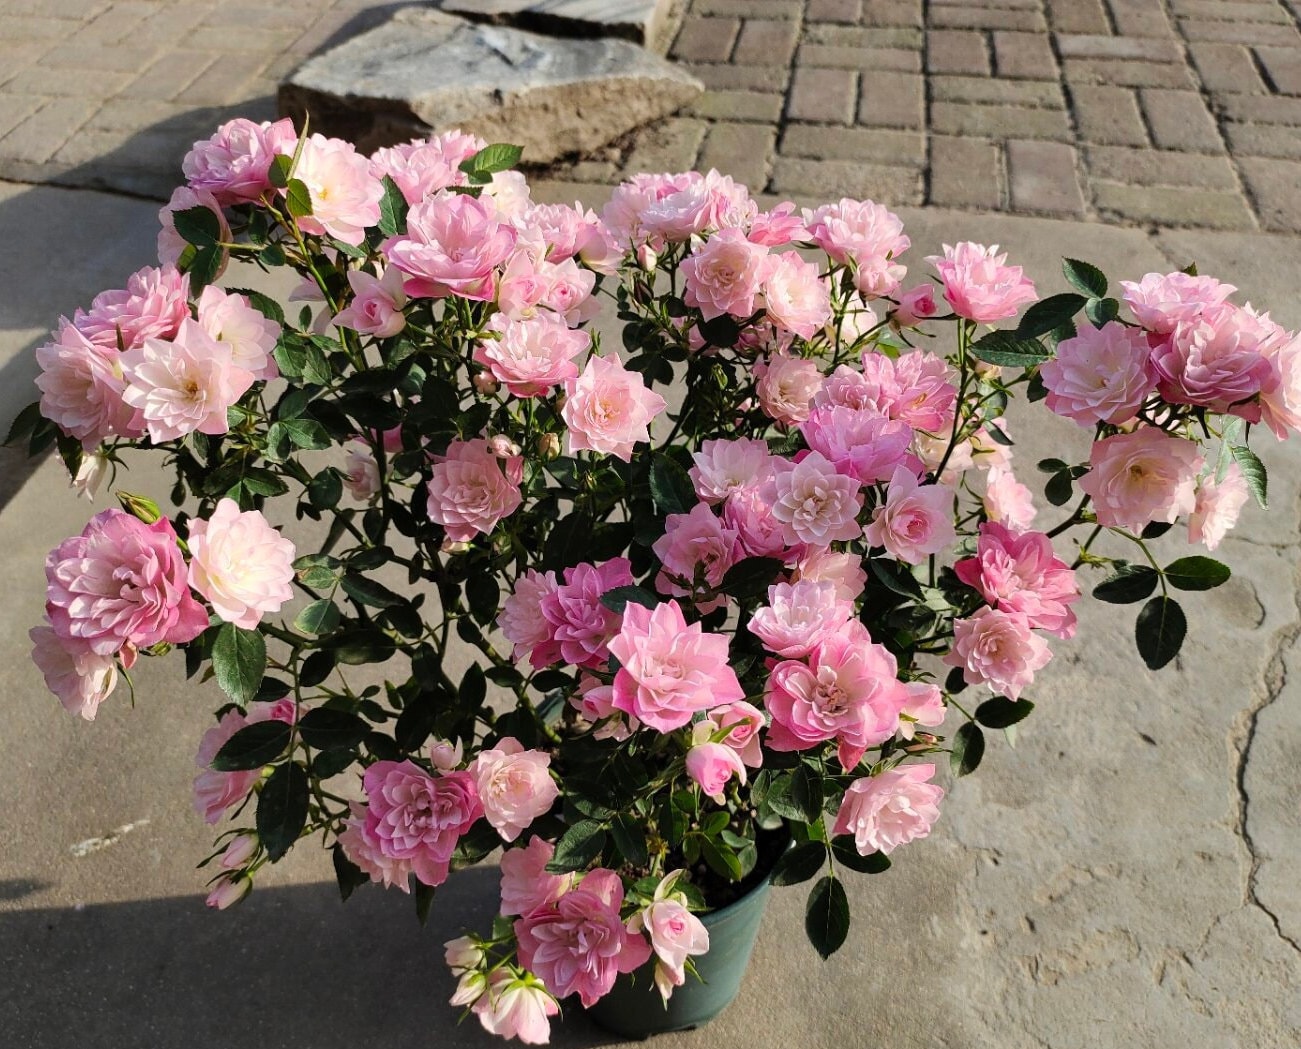 Mini Rose【Astro Sky|アストロスカイ】-1 Gal + OwnRoot Live Plant｜Lotus bloom| Abundant flowering|Blooms Abundantly| 天荷繁星|Strong Disease Resistance